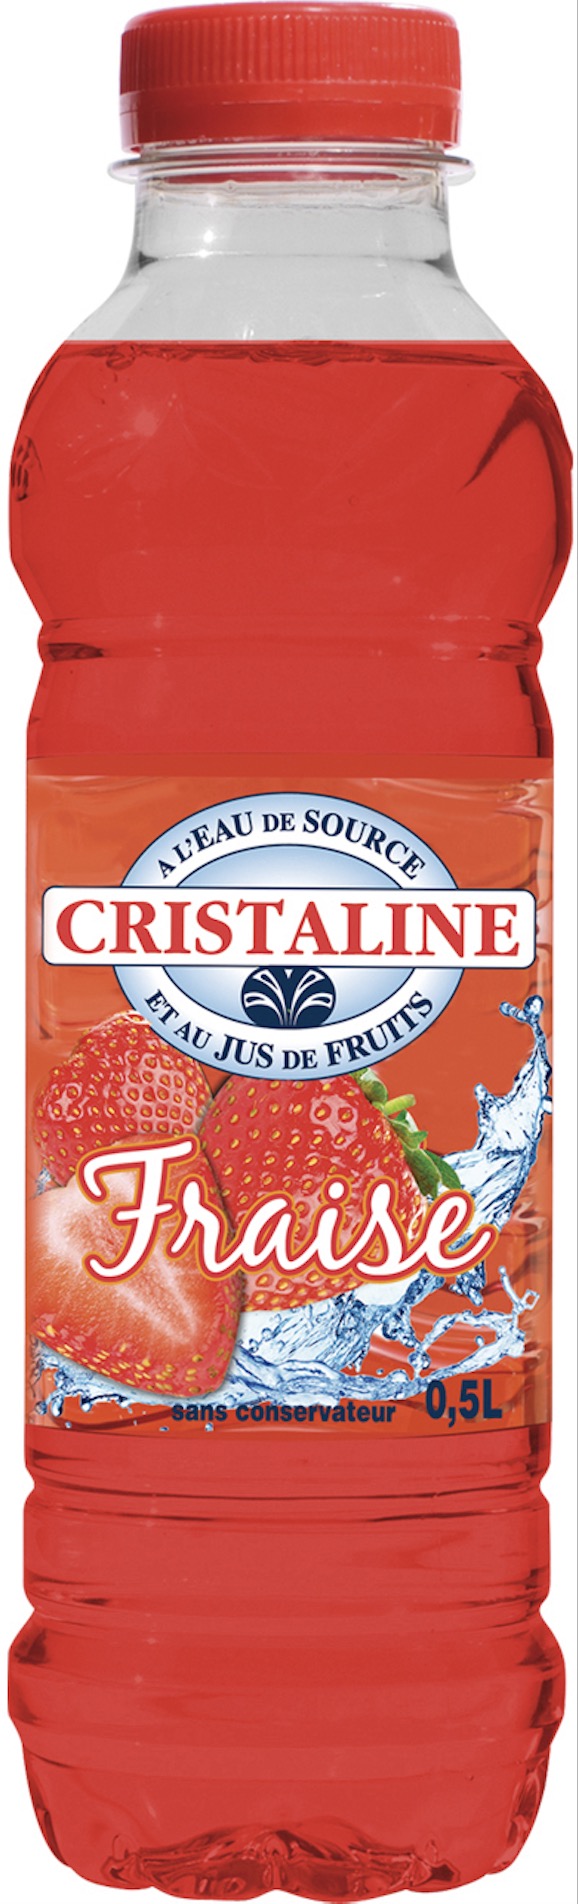 Cristaline Fraise